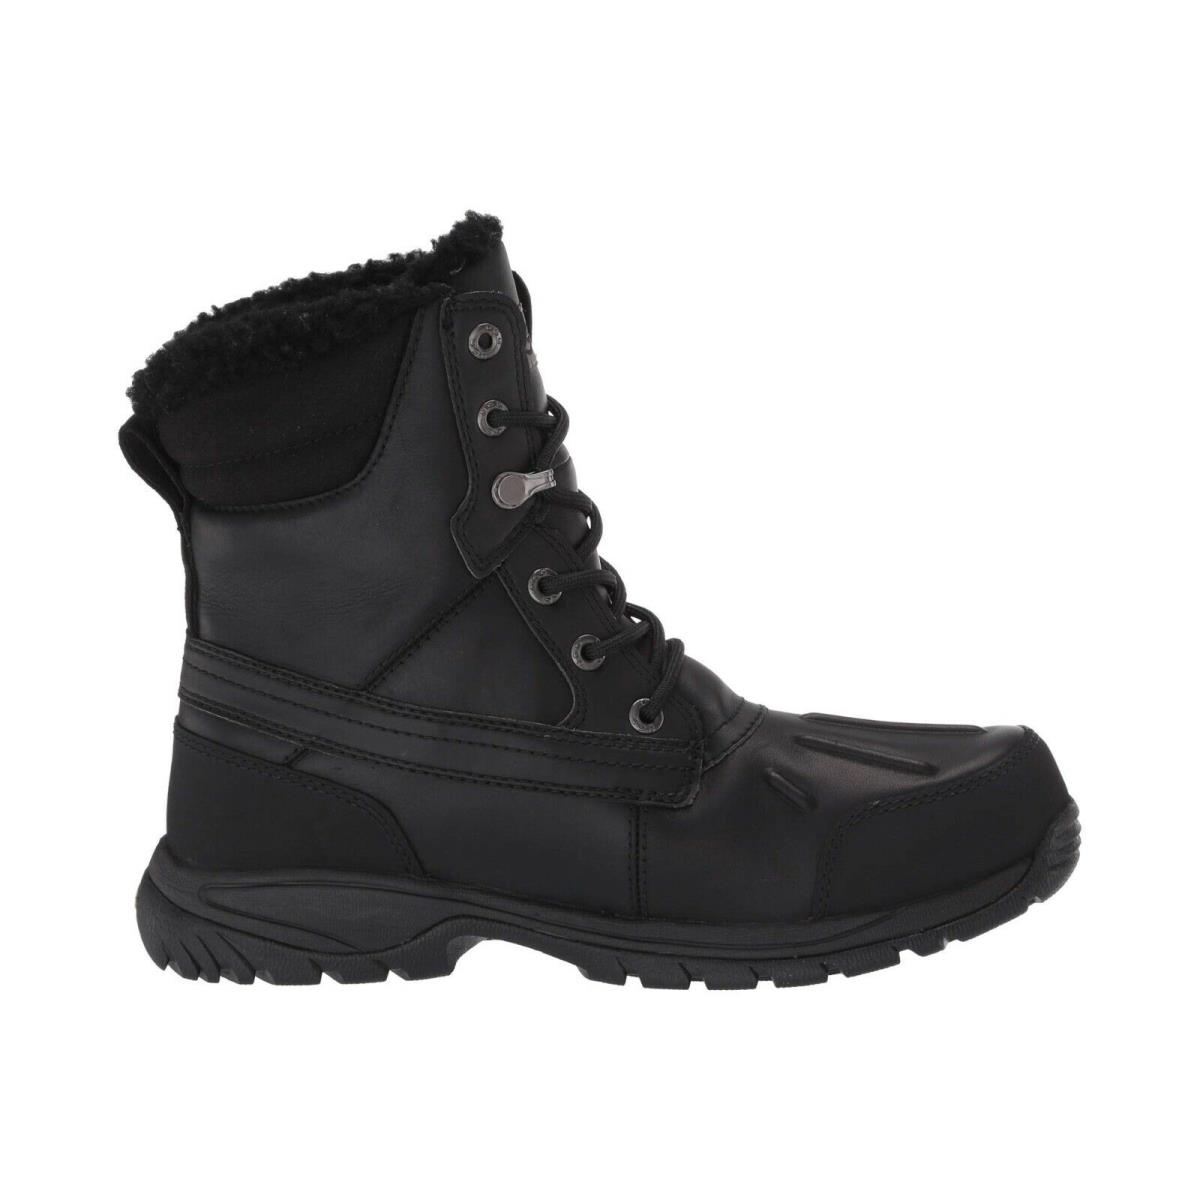 Ugg Men`s Felton Waterproof Leather Boots Casual Fashion Shoes Black Chestnut Black